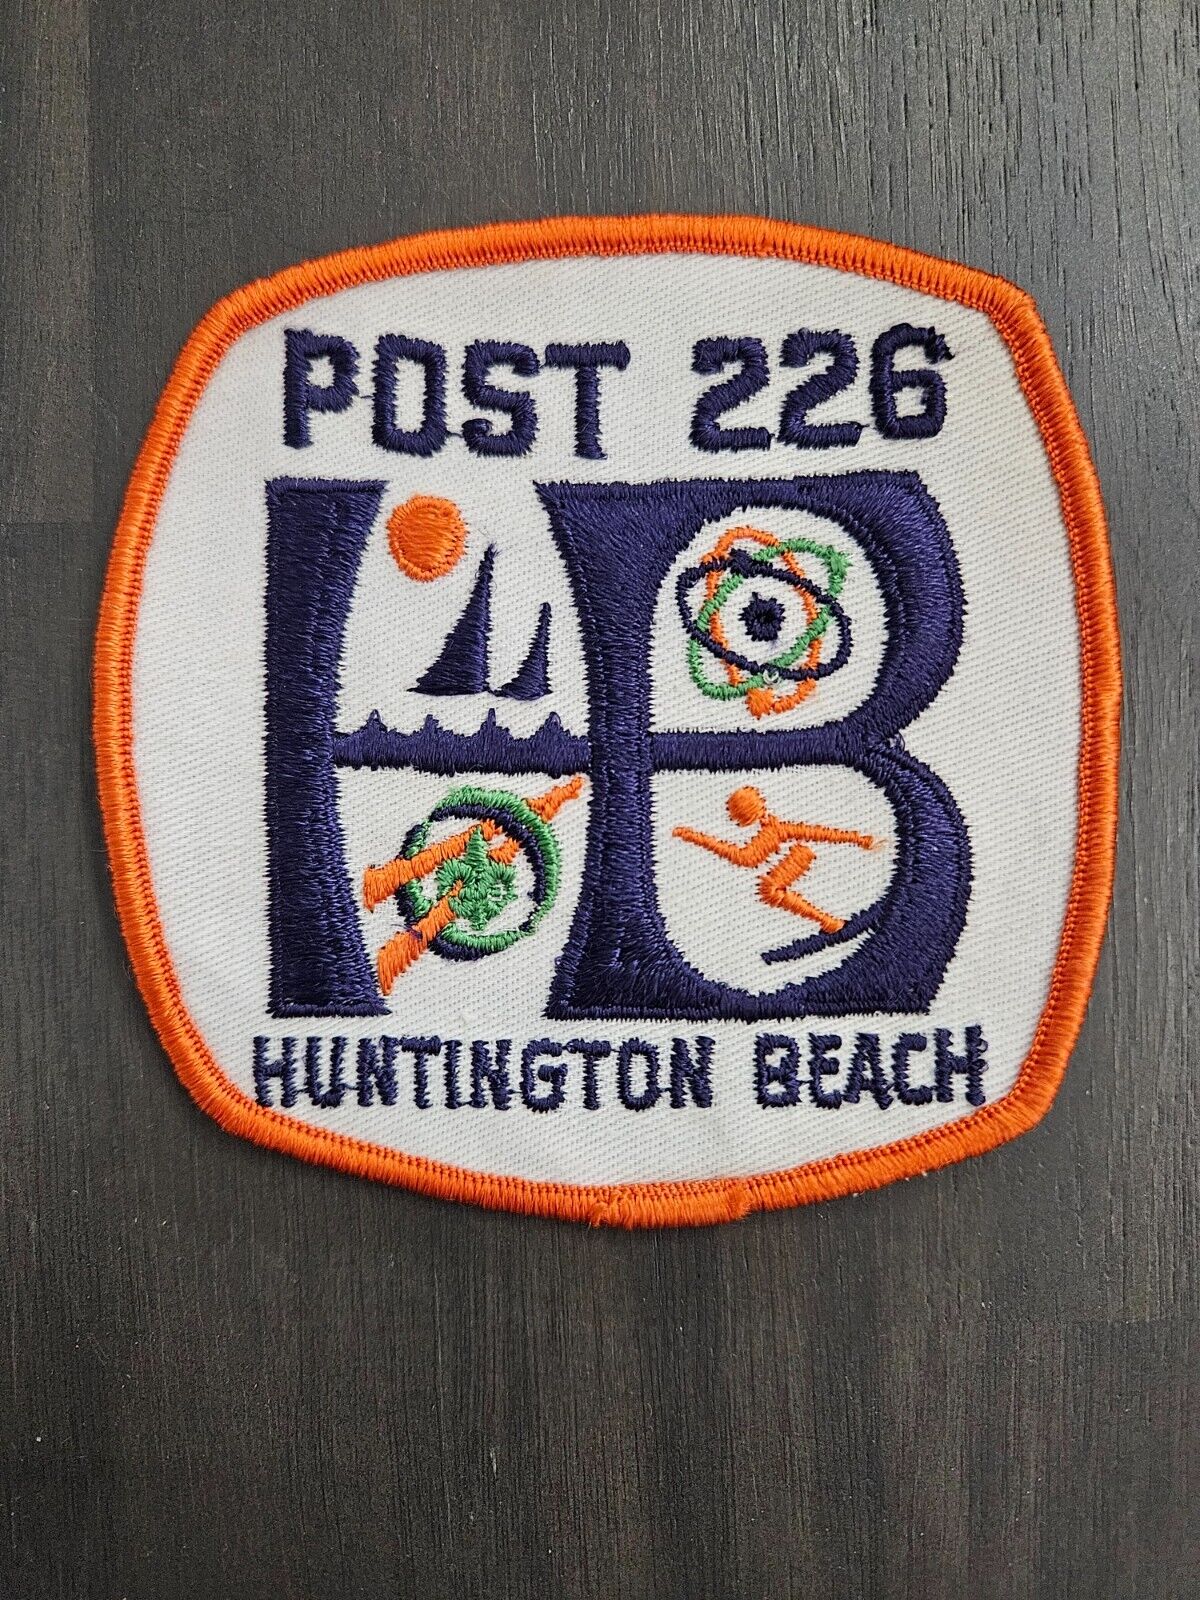 Boy Scout Explorer Post 226 Huntington Beach California Vintage BSA Patch